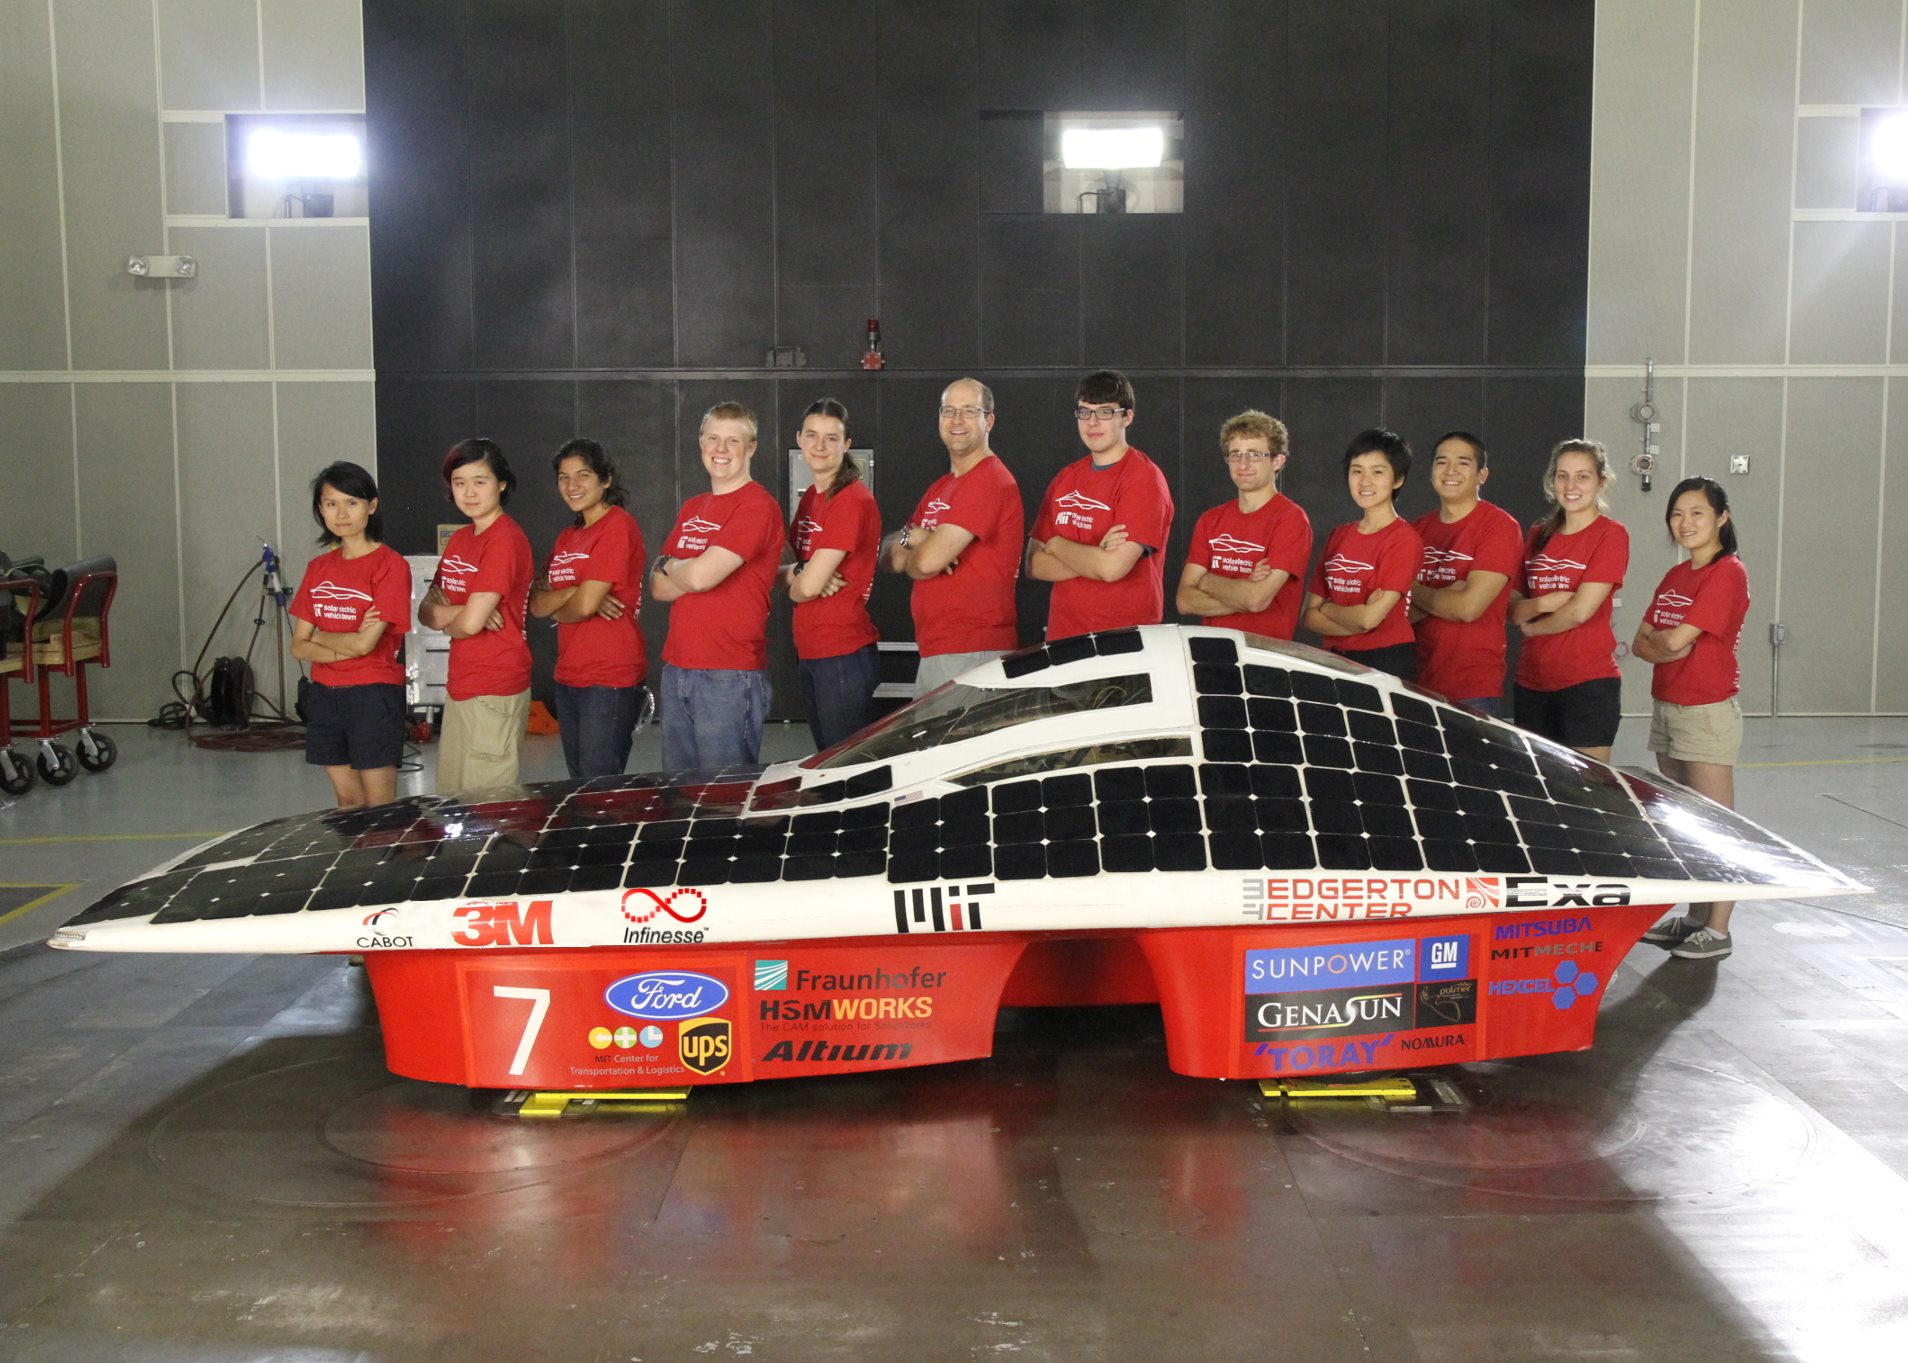 MIT Solar Electric Vehicle Team